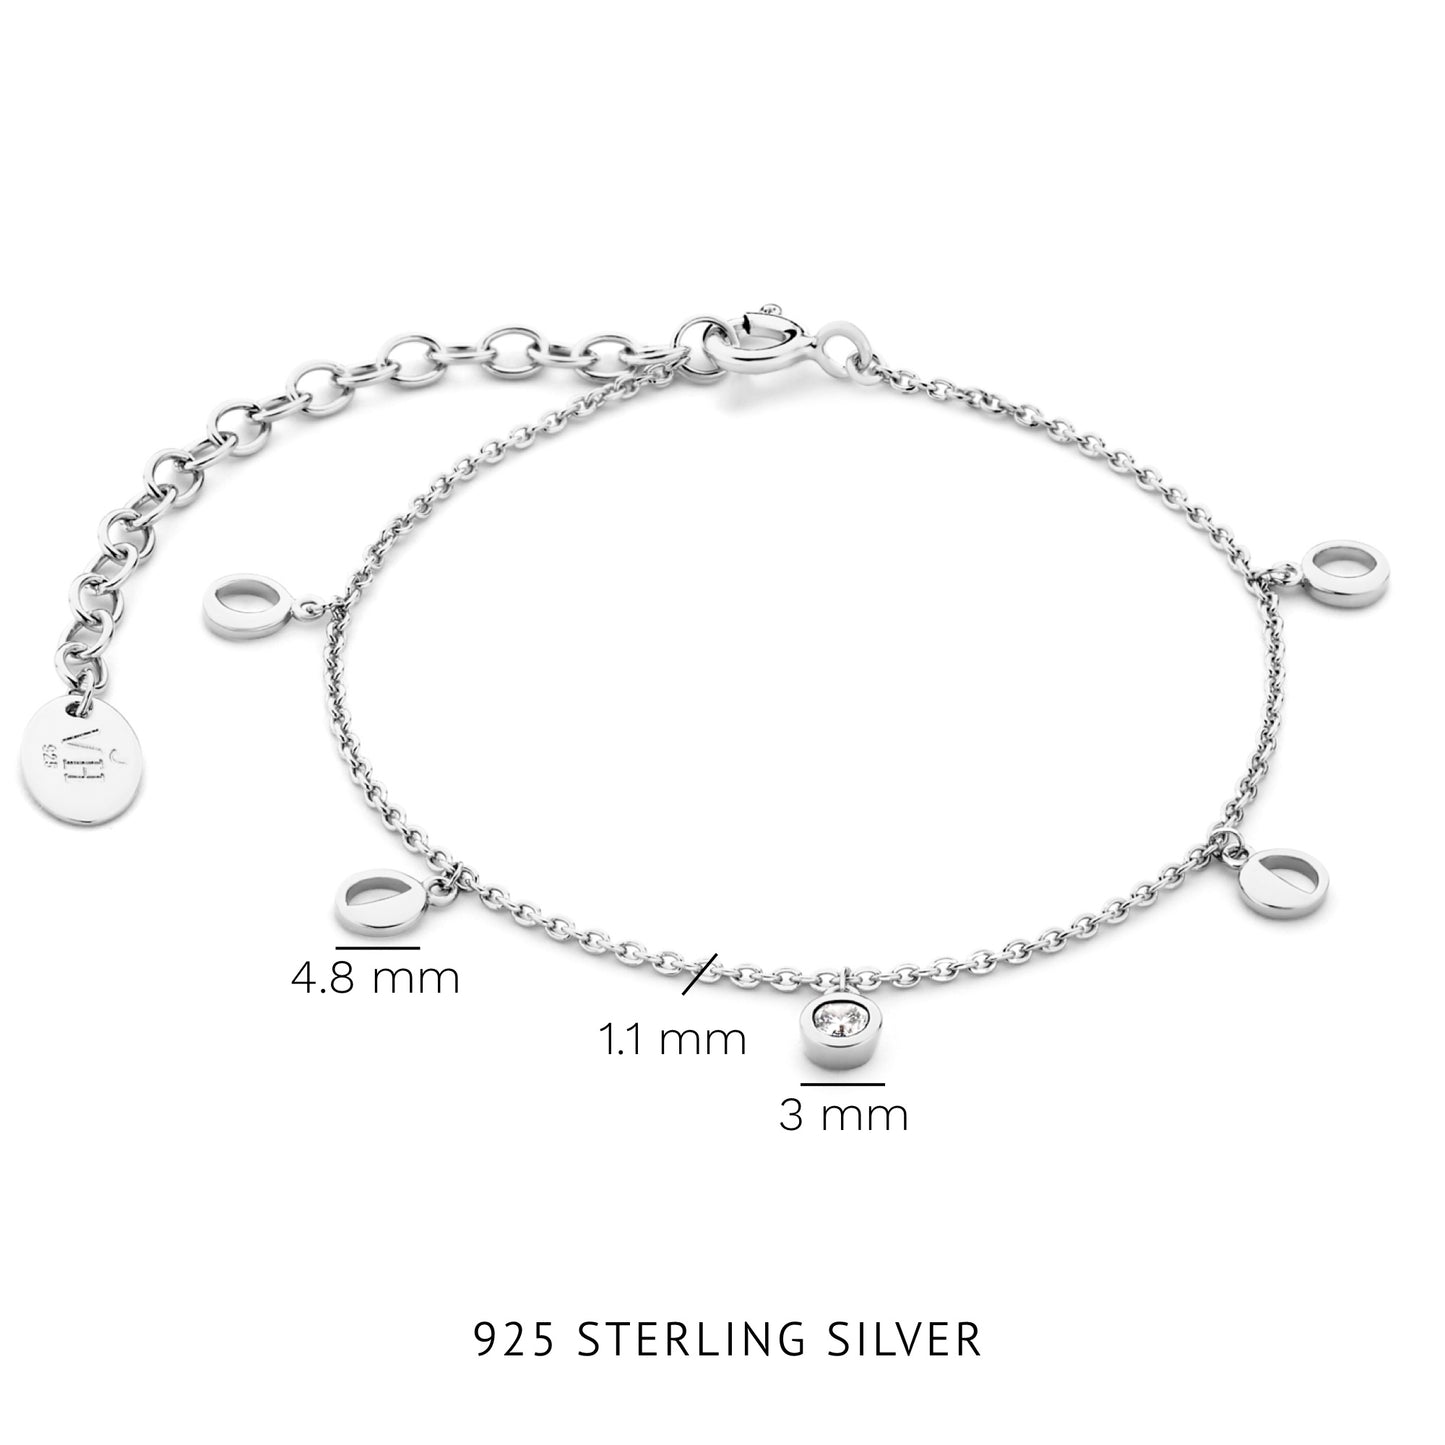 Luna bracciale in argento sterling 925 con pietra zircone bianca